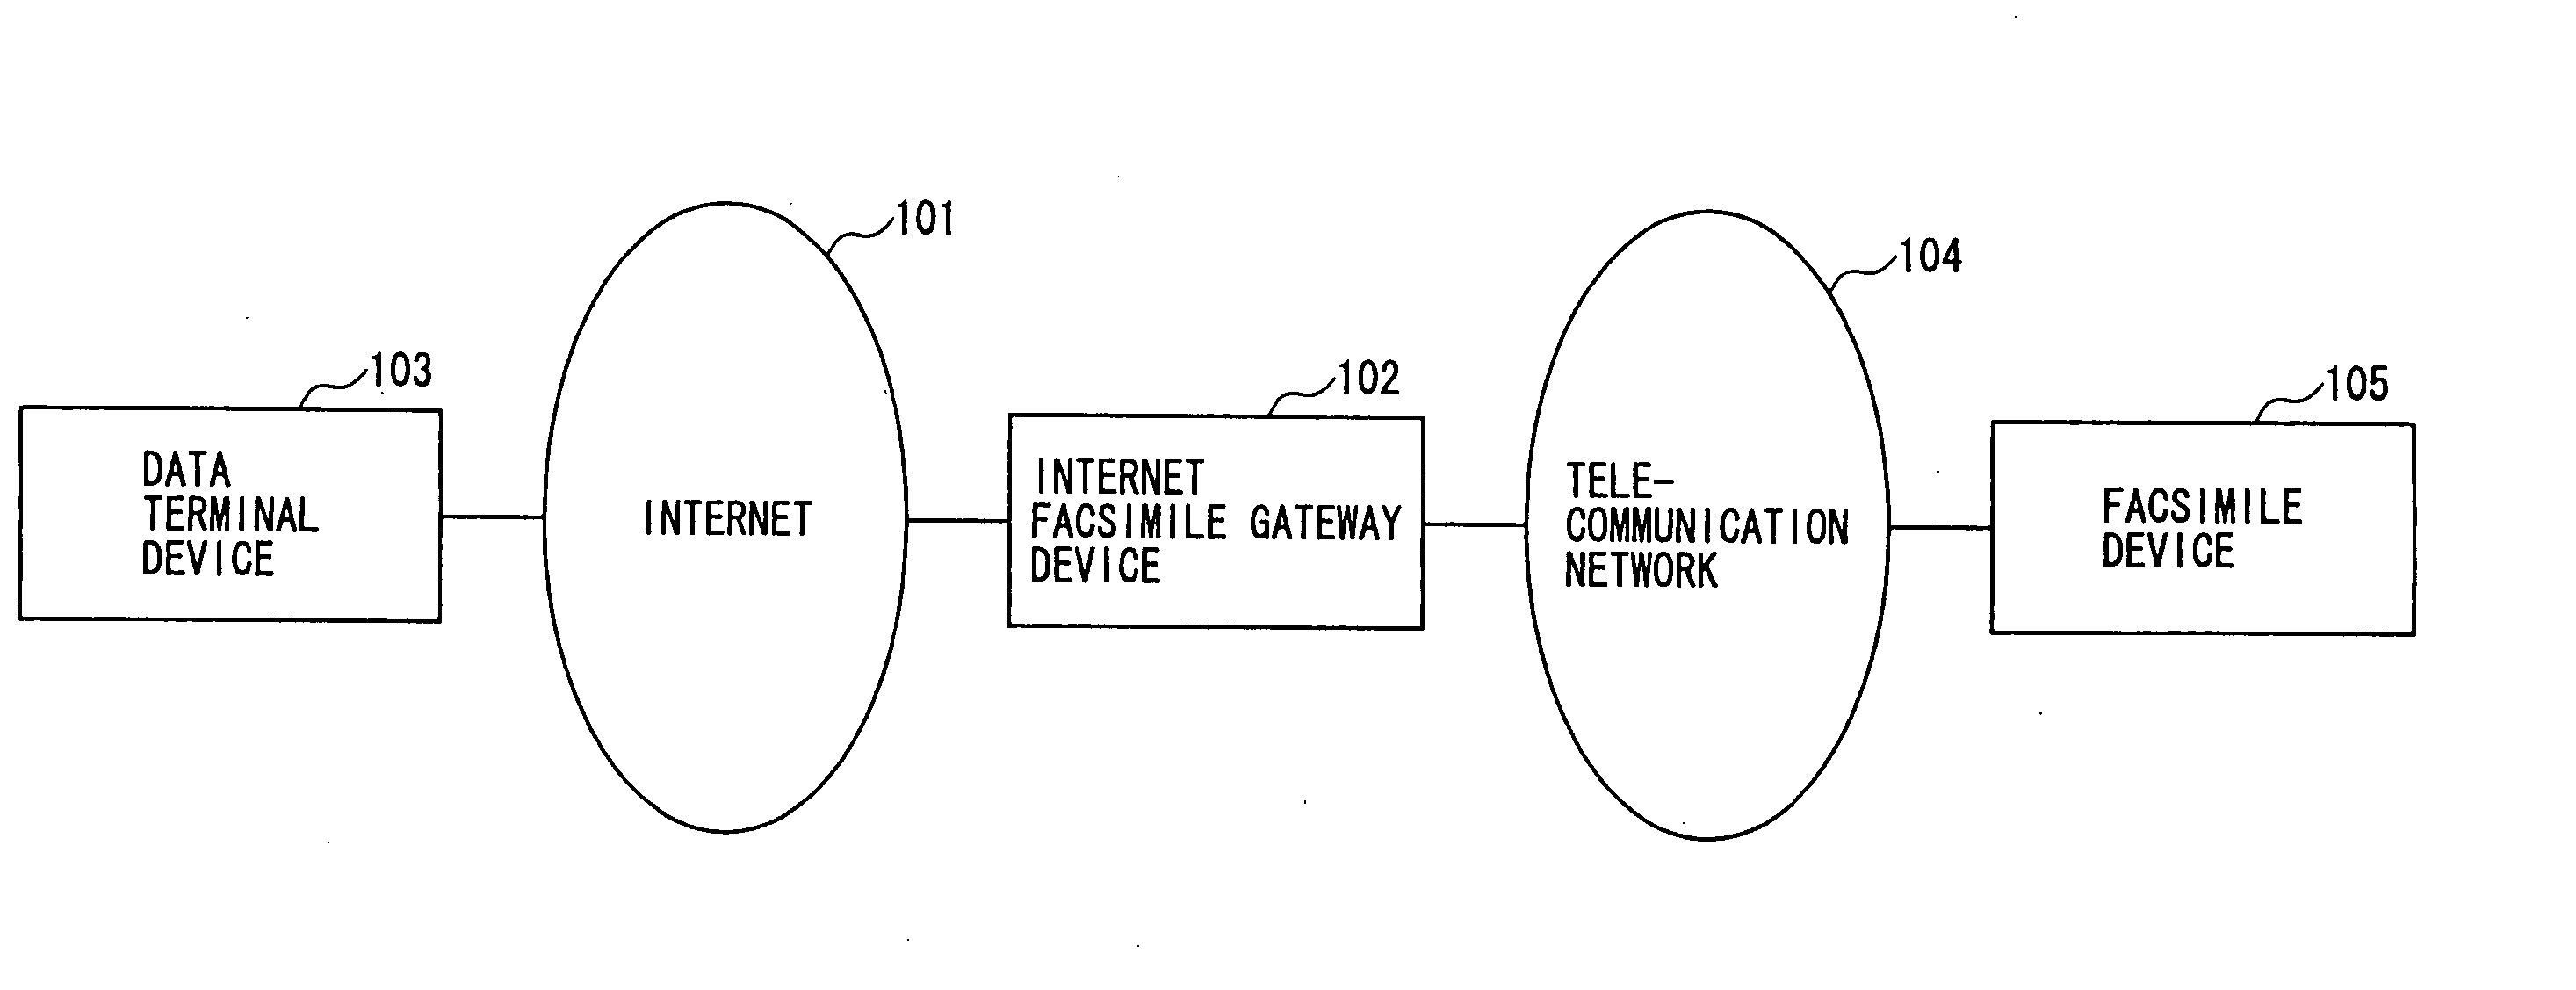 Internet facsimile gateway device